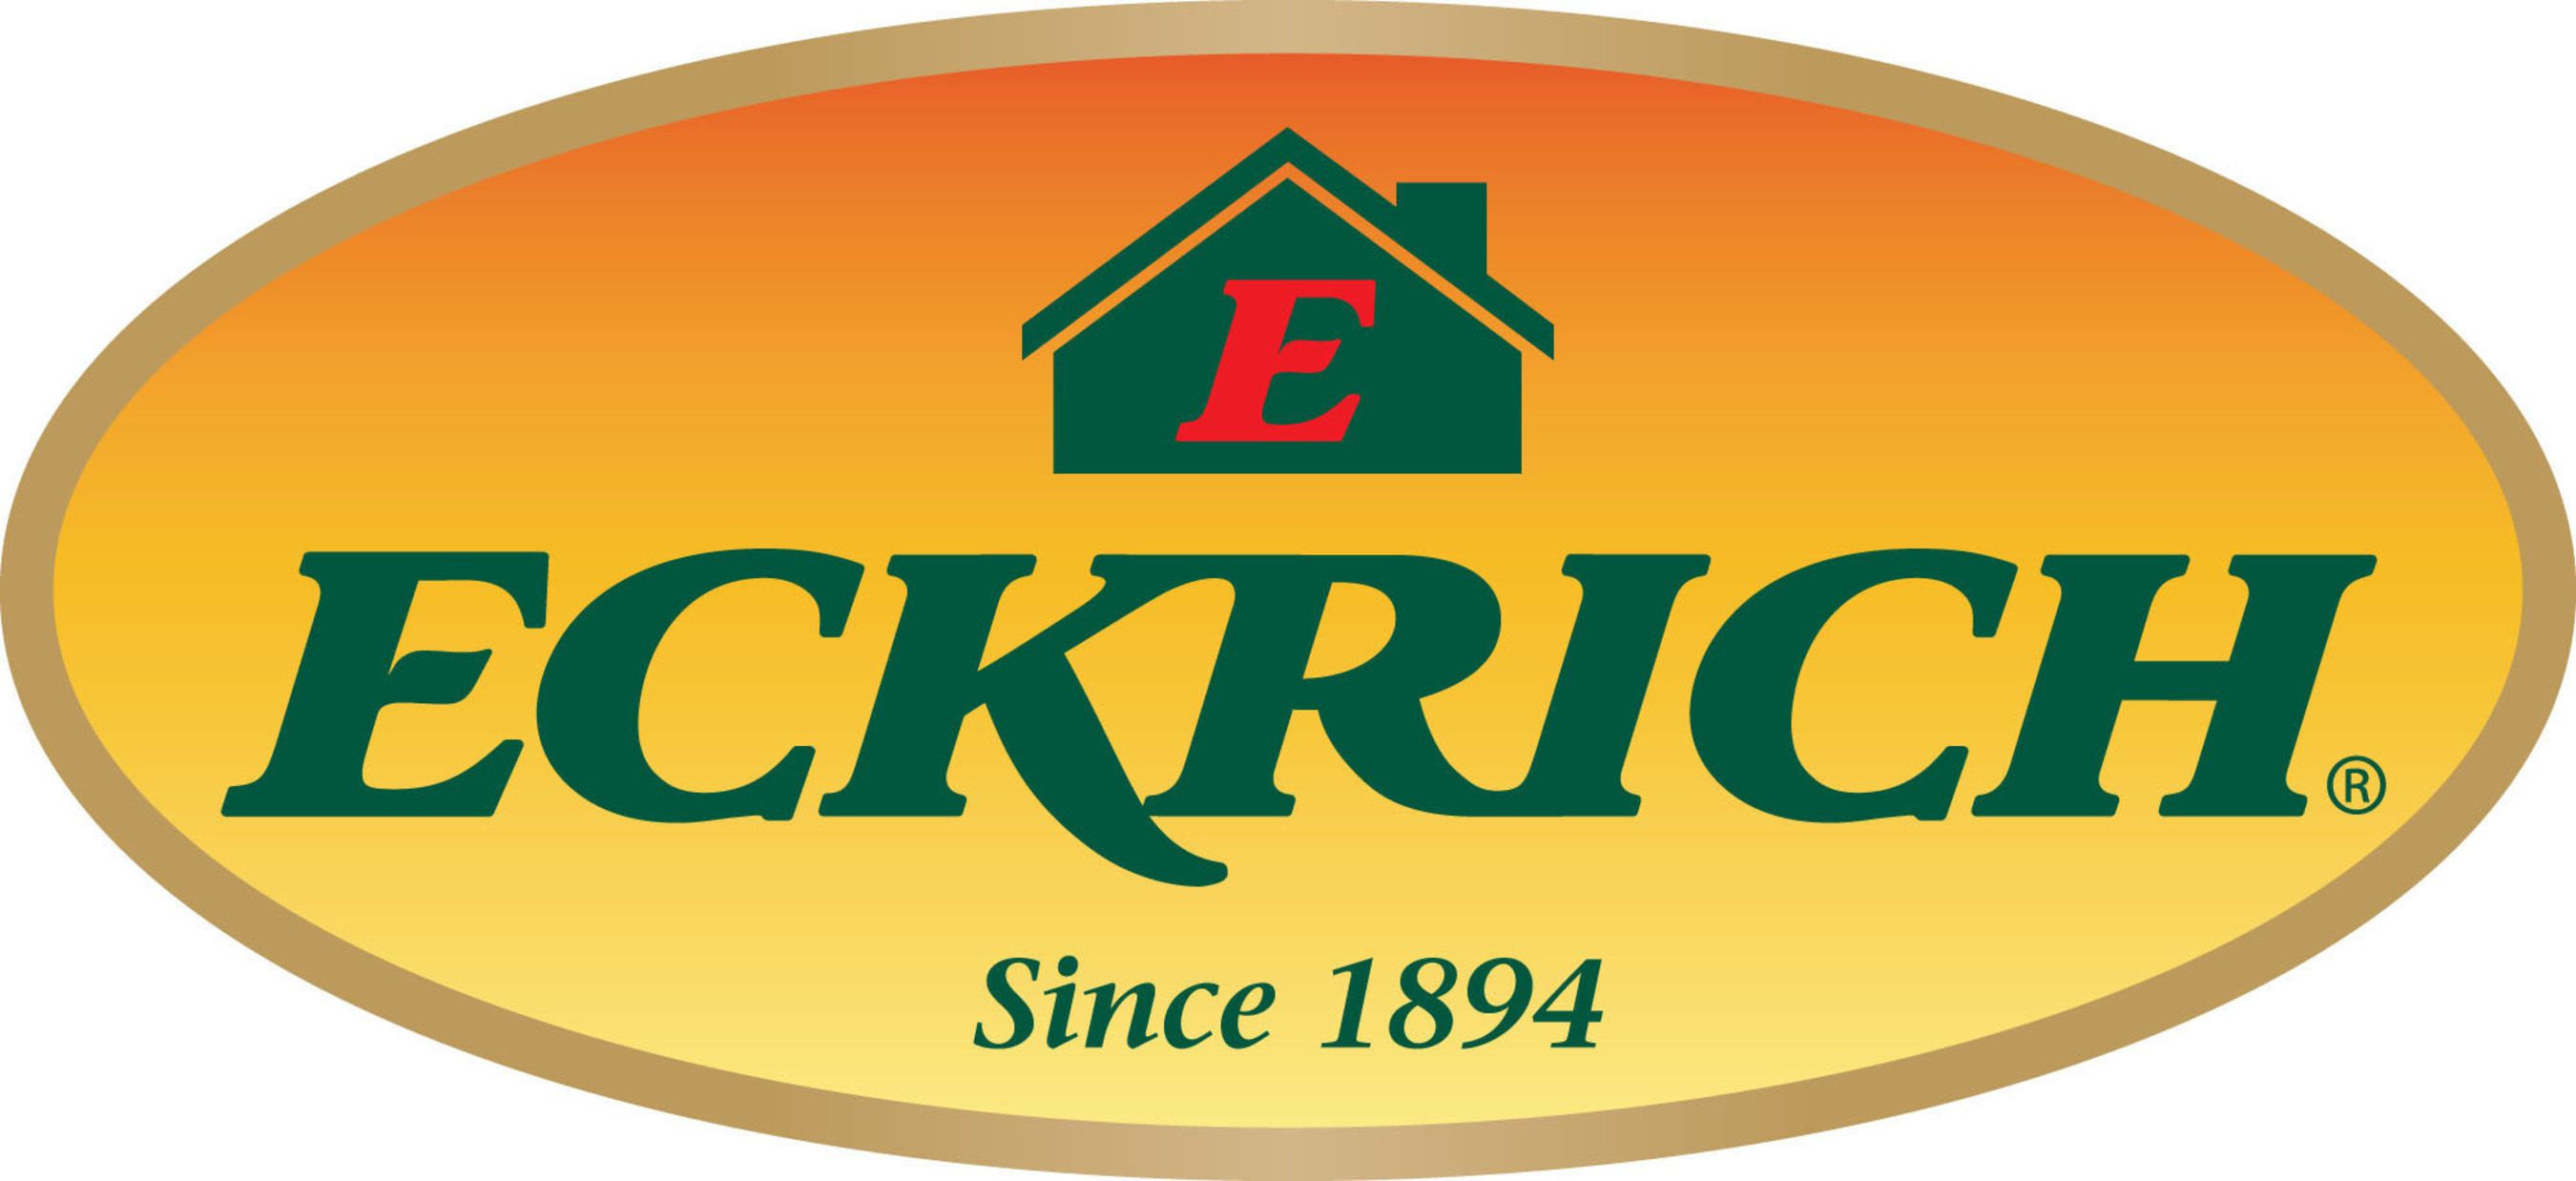 Eckrich logo.